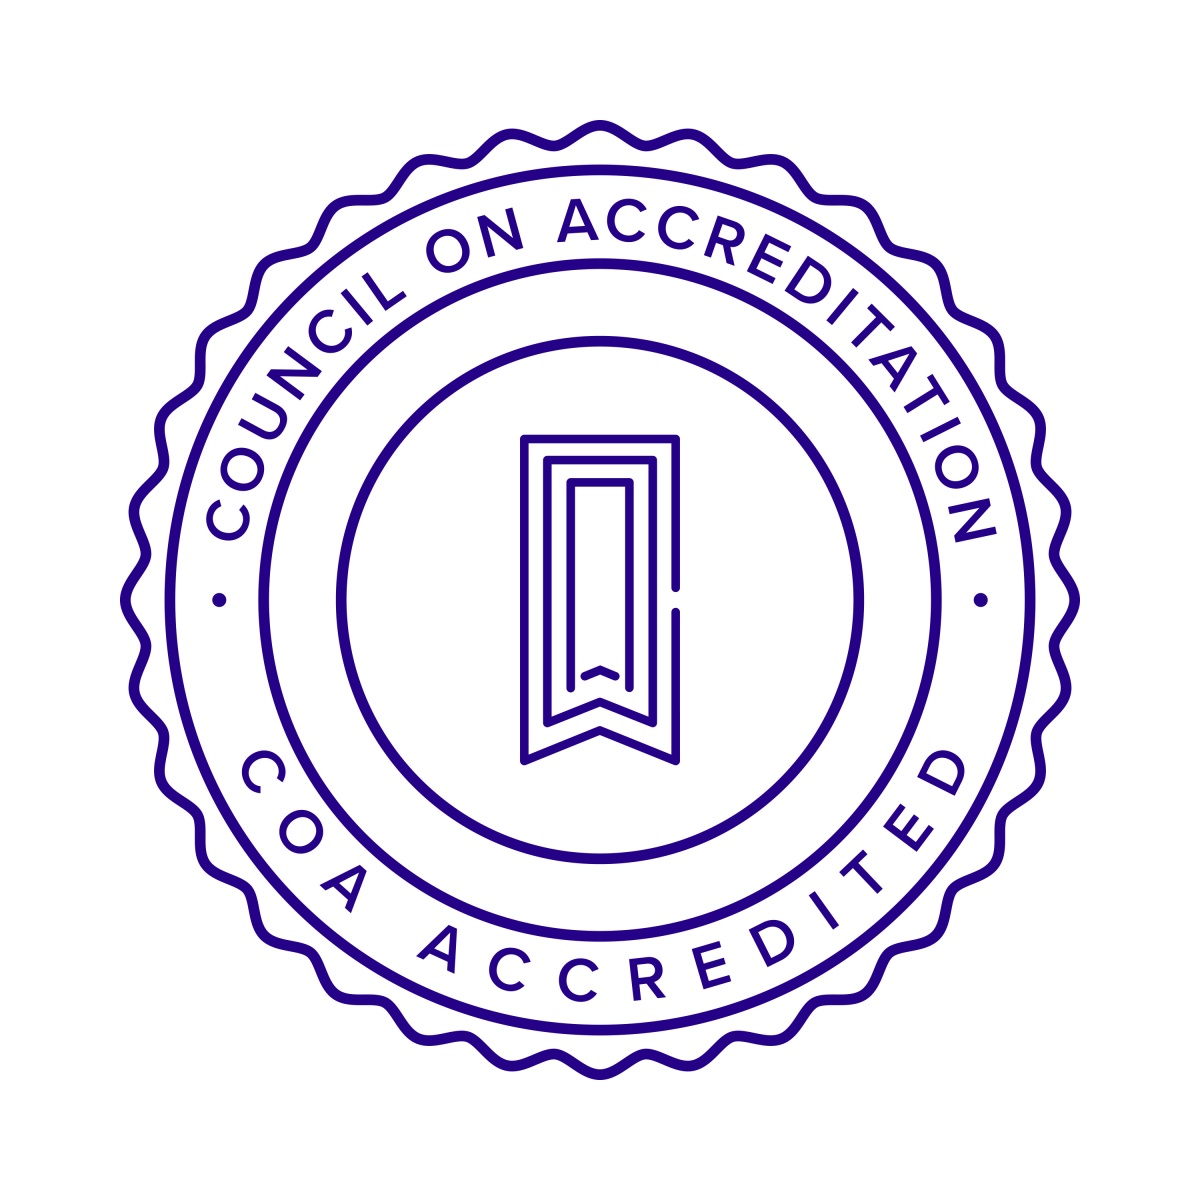 "Council on Accreditation" COA Accredited logo